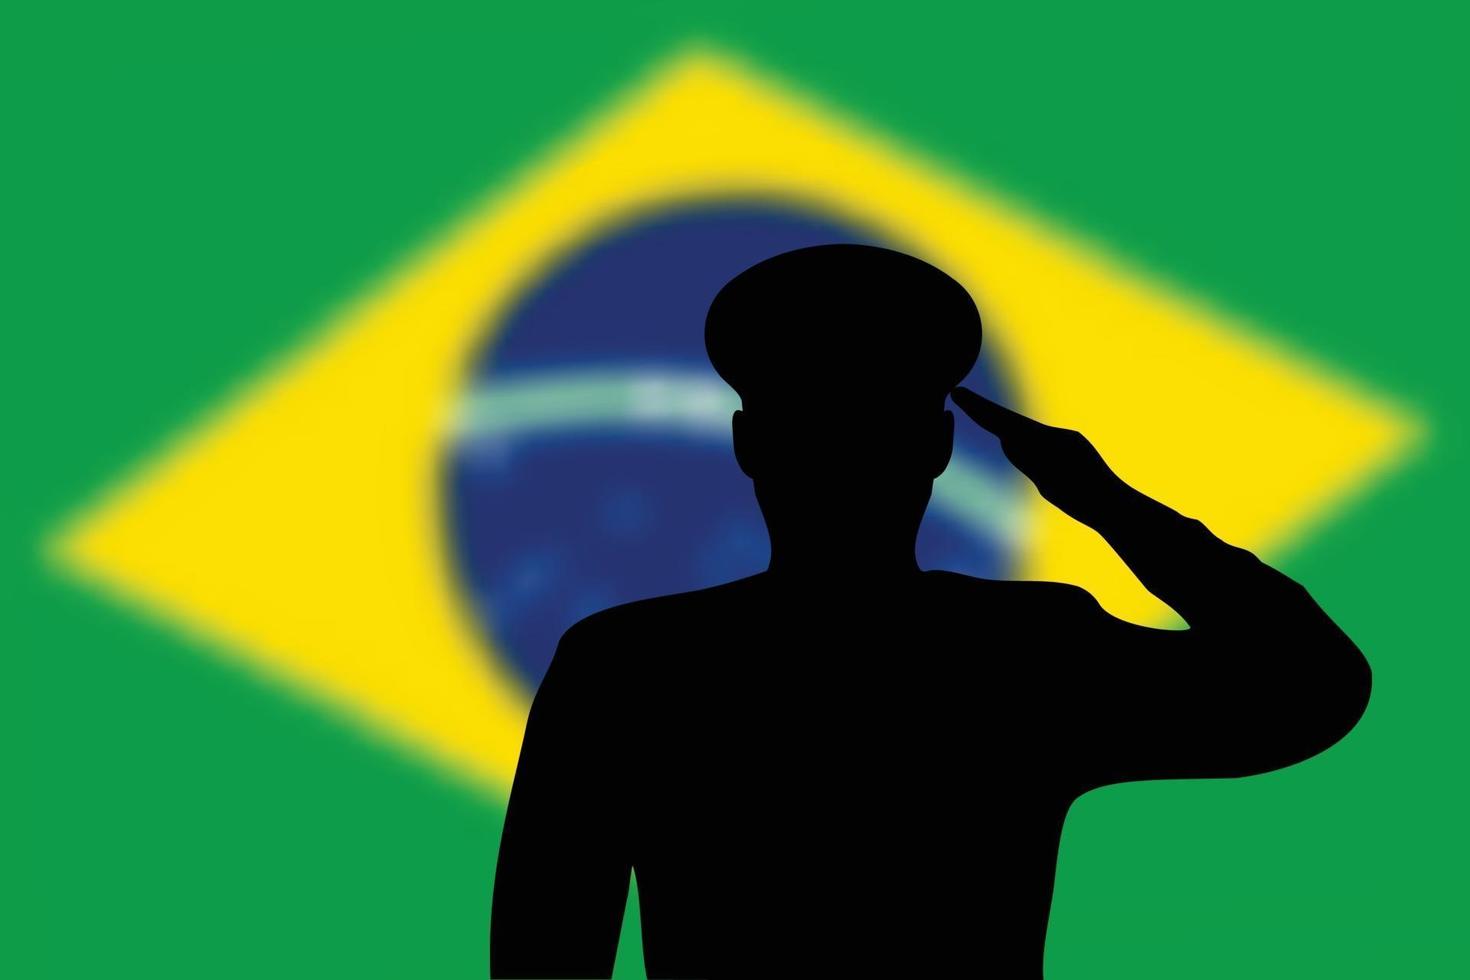 sagoma di saldatura su sfondo sfocato con bandiera brasile. vettore